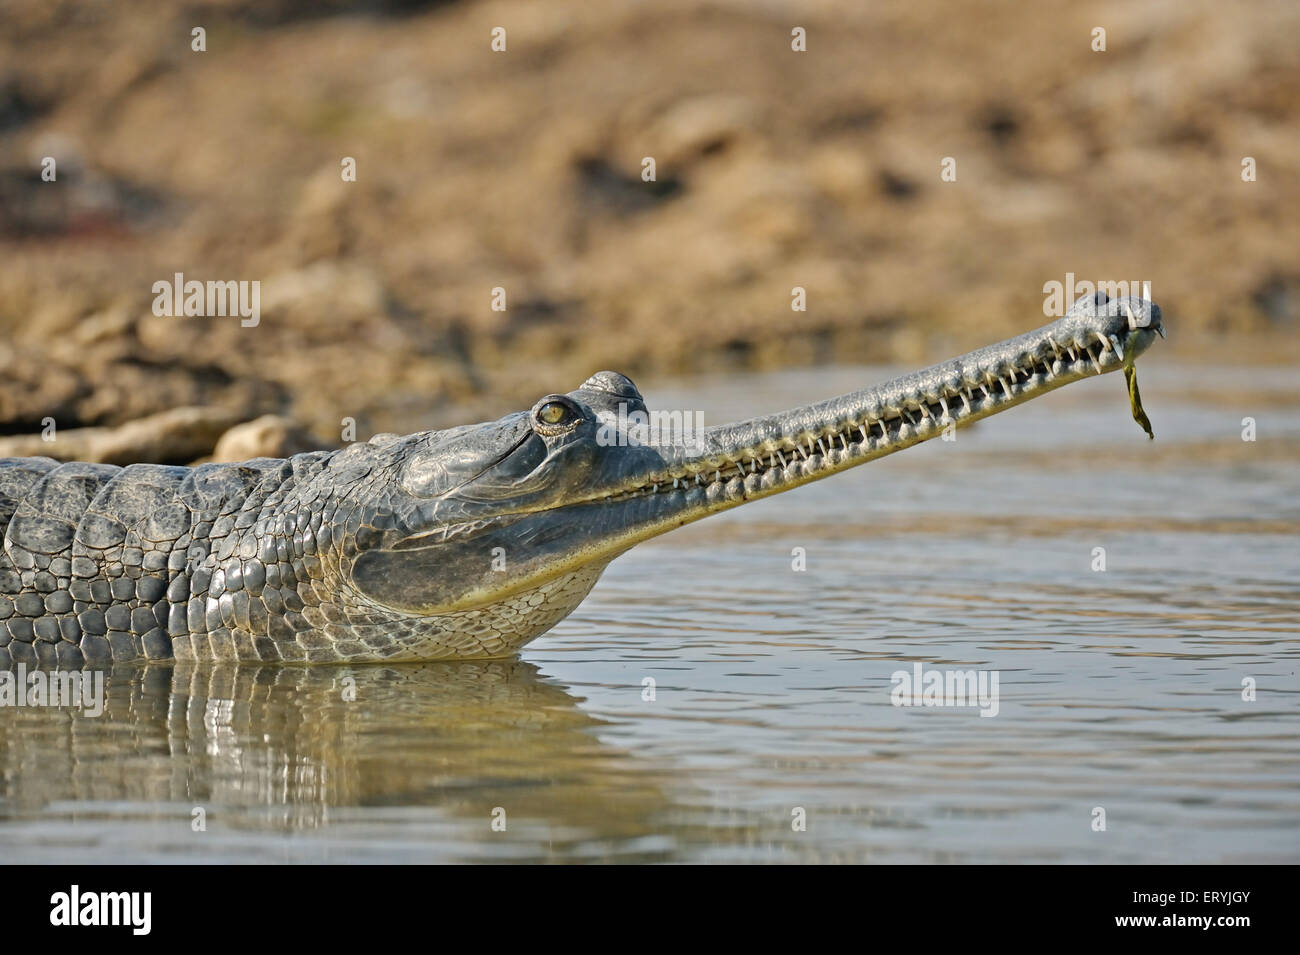 Gharial, gavial, gavialis gangeticus, poisson mangeant des crocodiles, basking dans la rivière Chambal, Rajasthan, Inde, Asie Banque D'Images